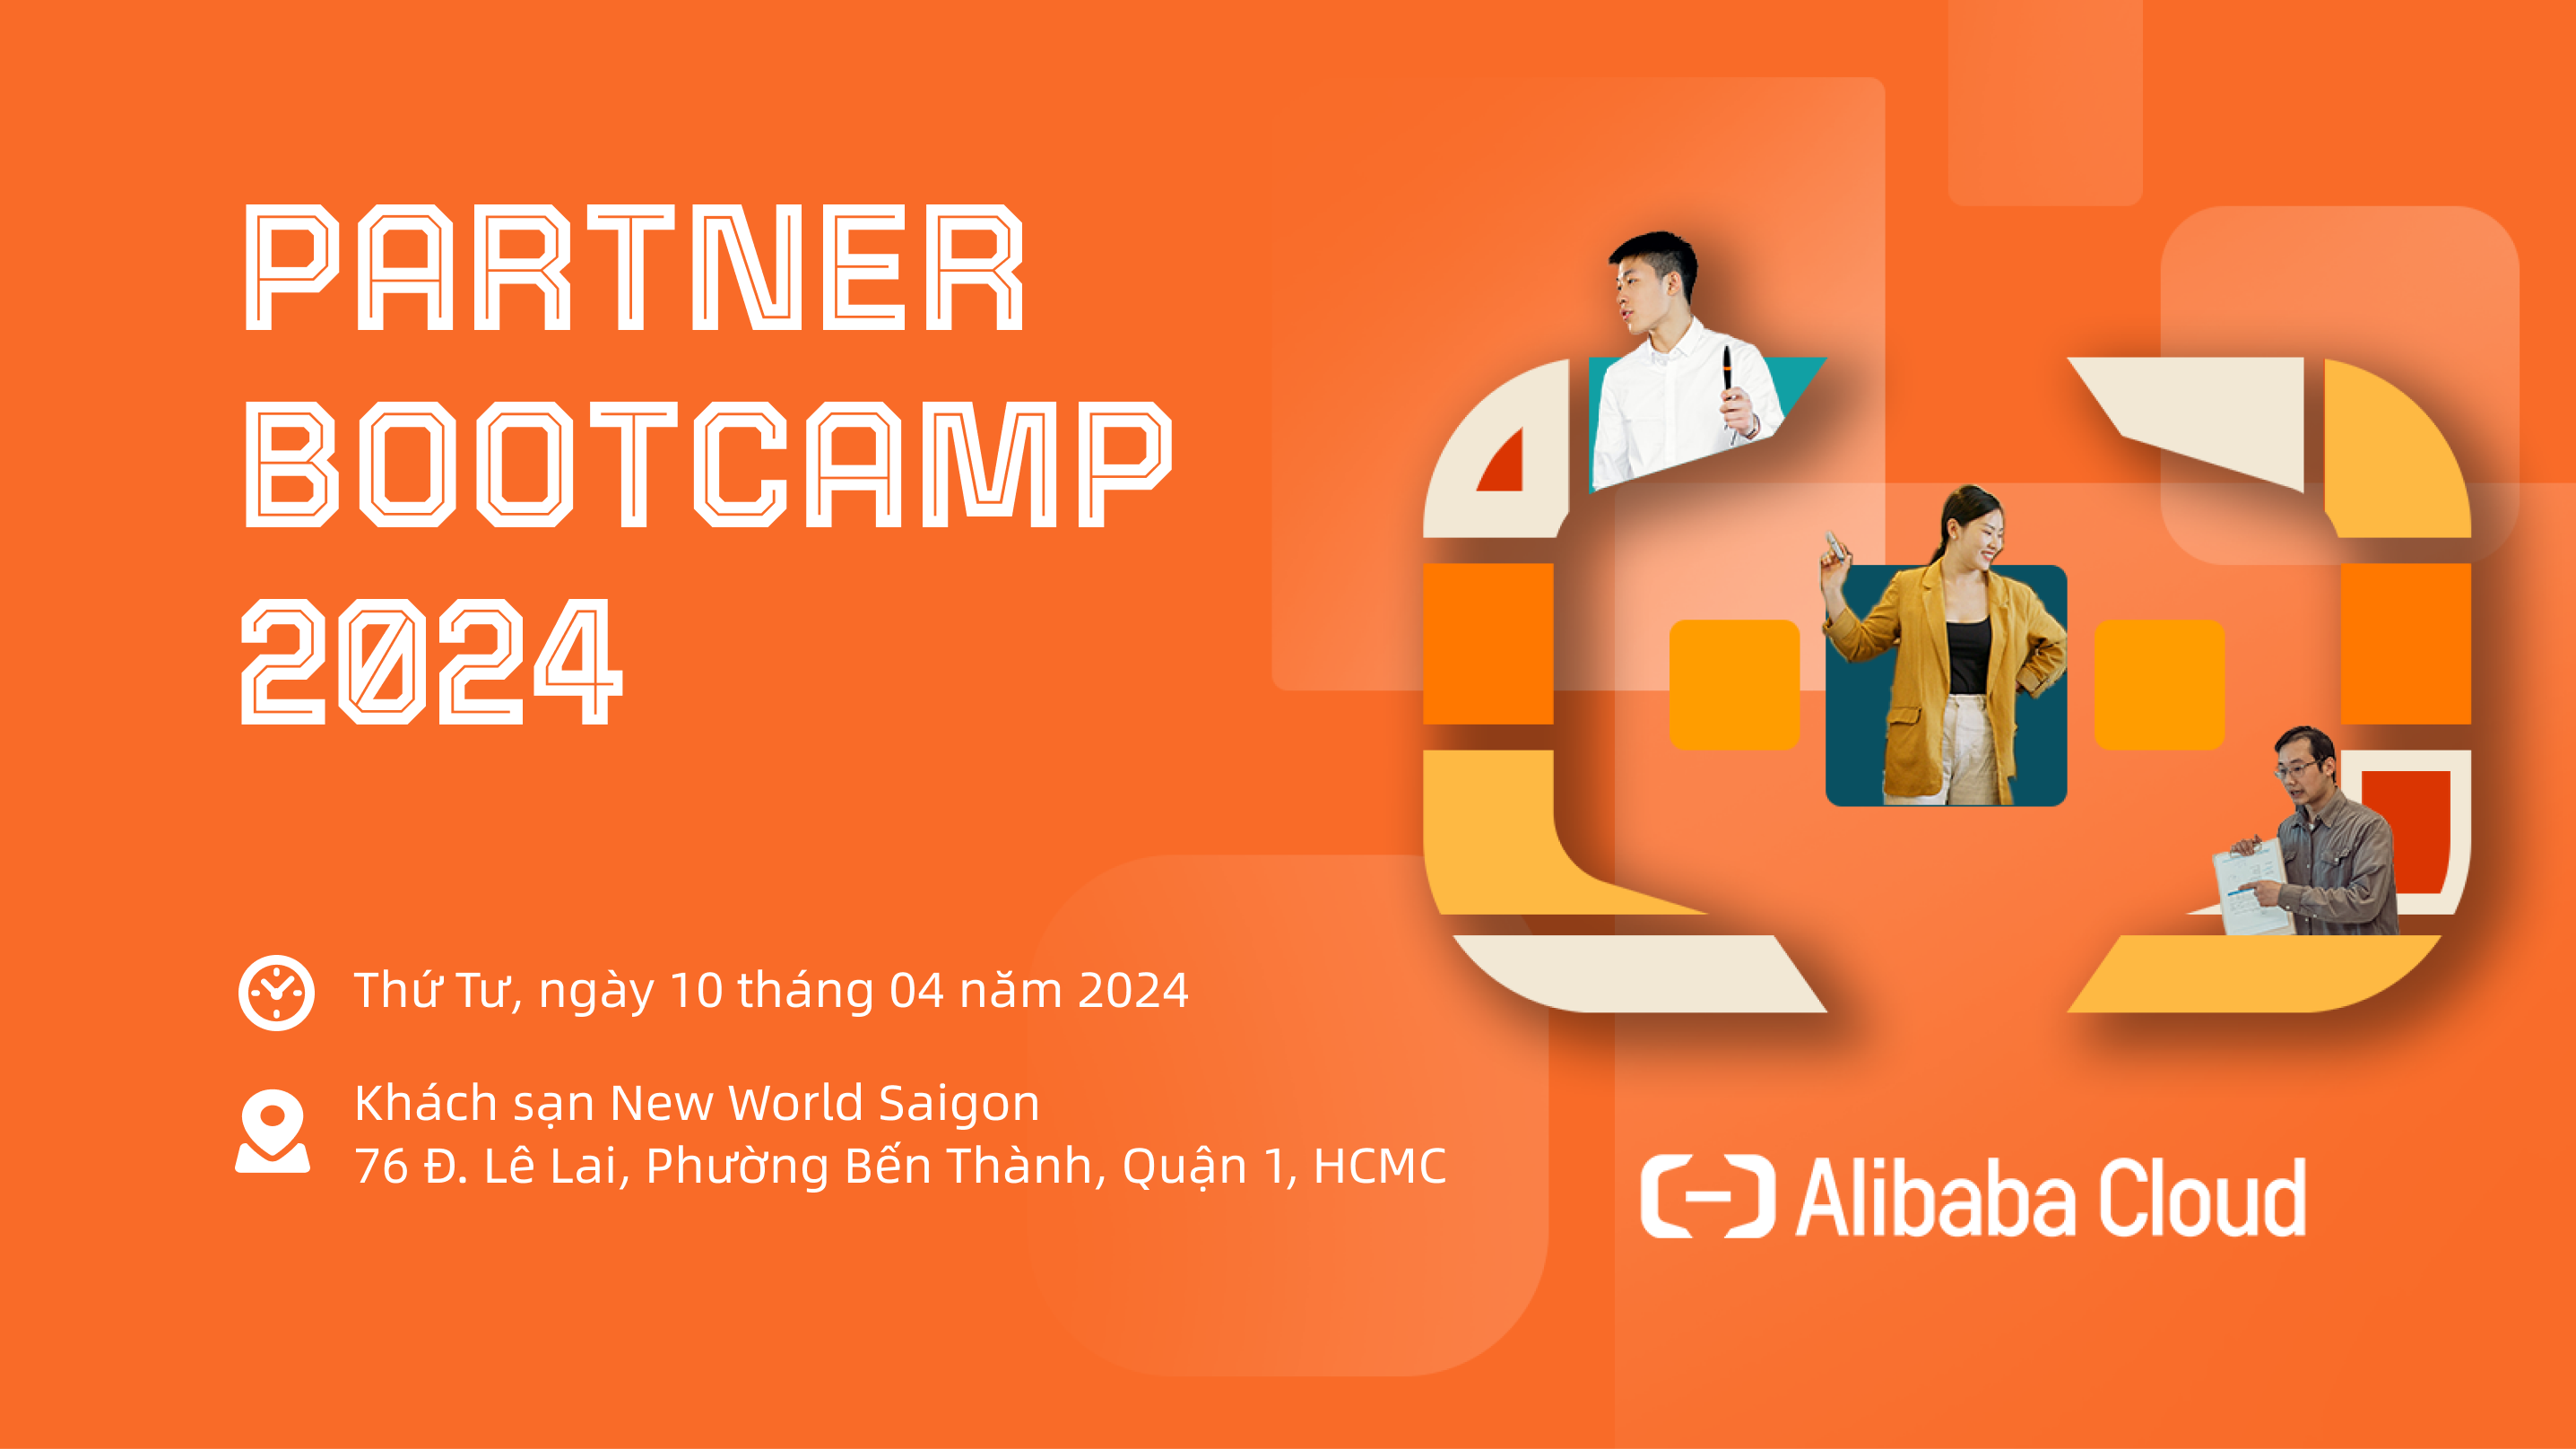 Alibaba Cloud Partner Bootcamp 2024